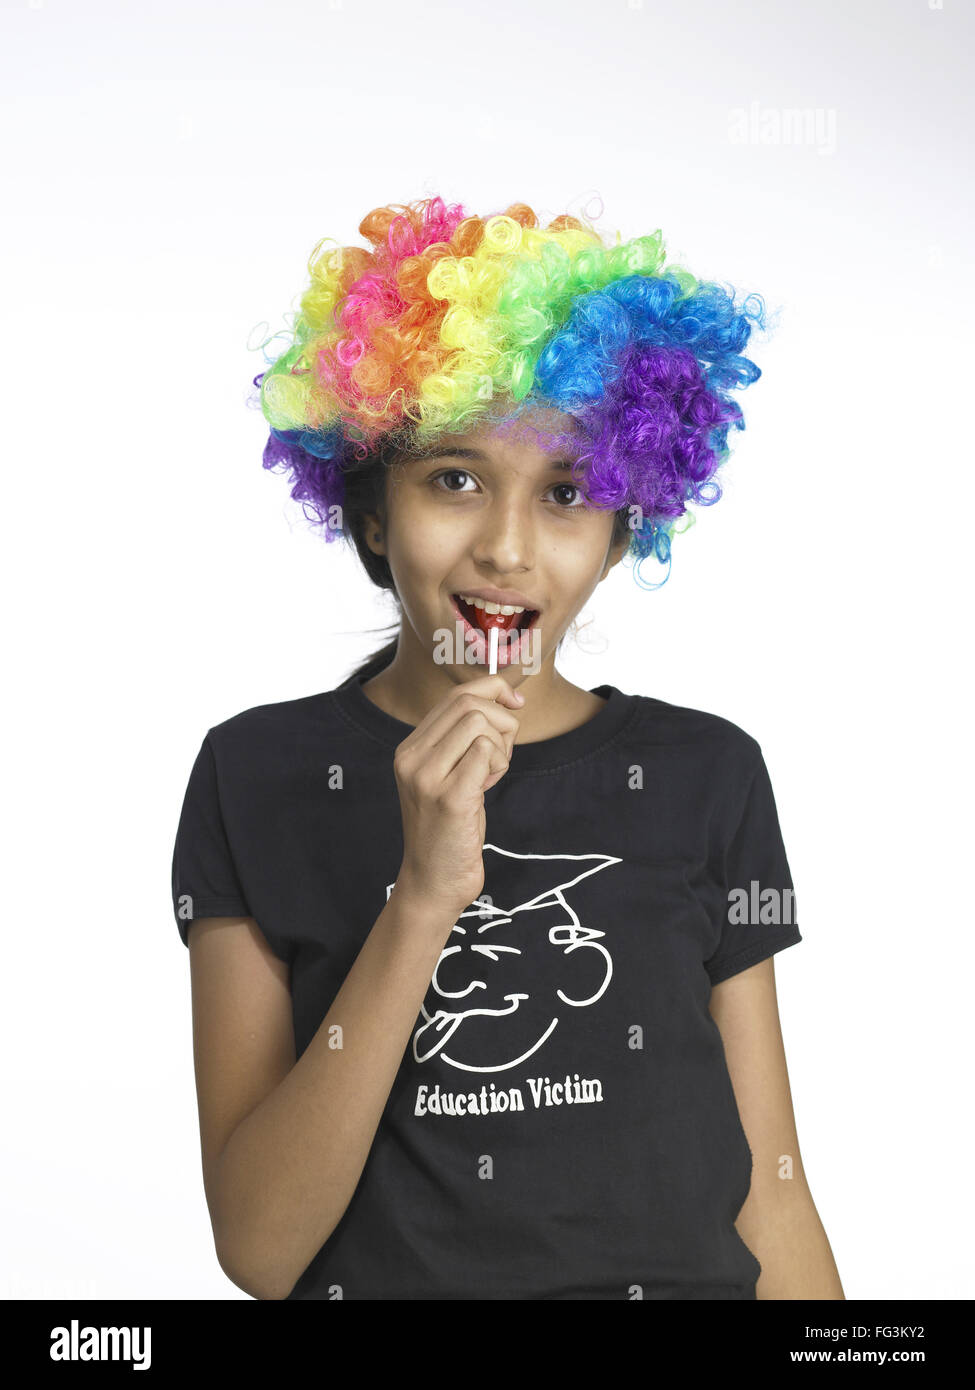 South Asian junge Inderin in bunten Frisur mit Lollipop in Hand Herr  Stockfotografie - Alamy